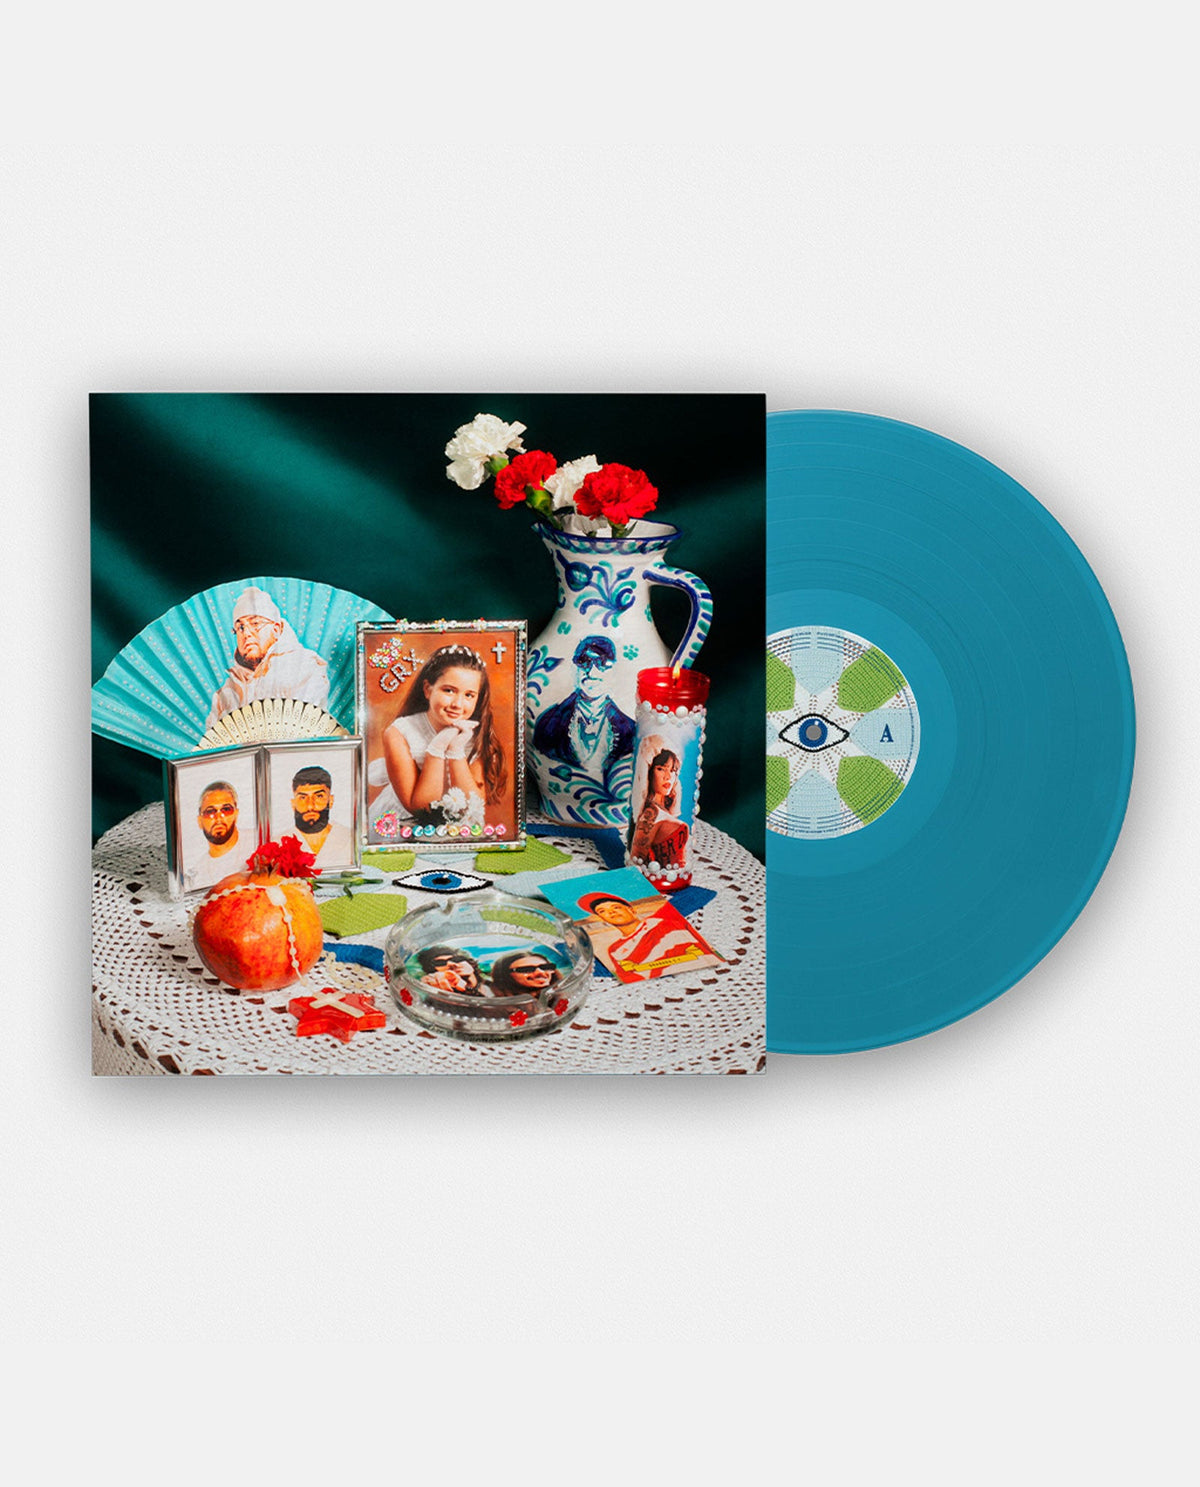 Lola Indigo - LP Vinilo 10" Azul "GRX" - D2fy · Rocktud - D2fy